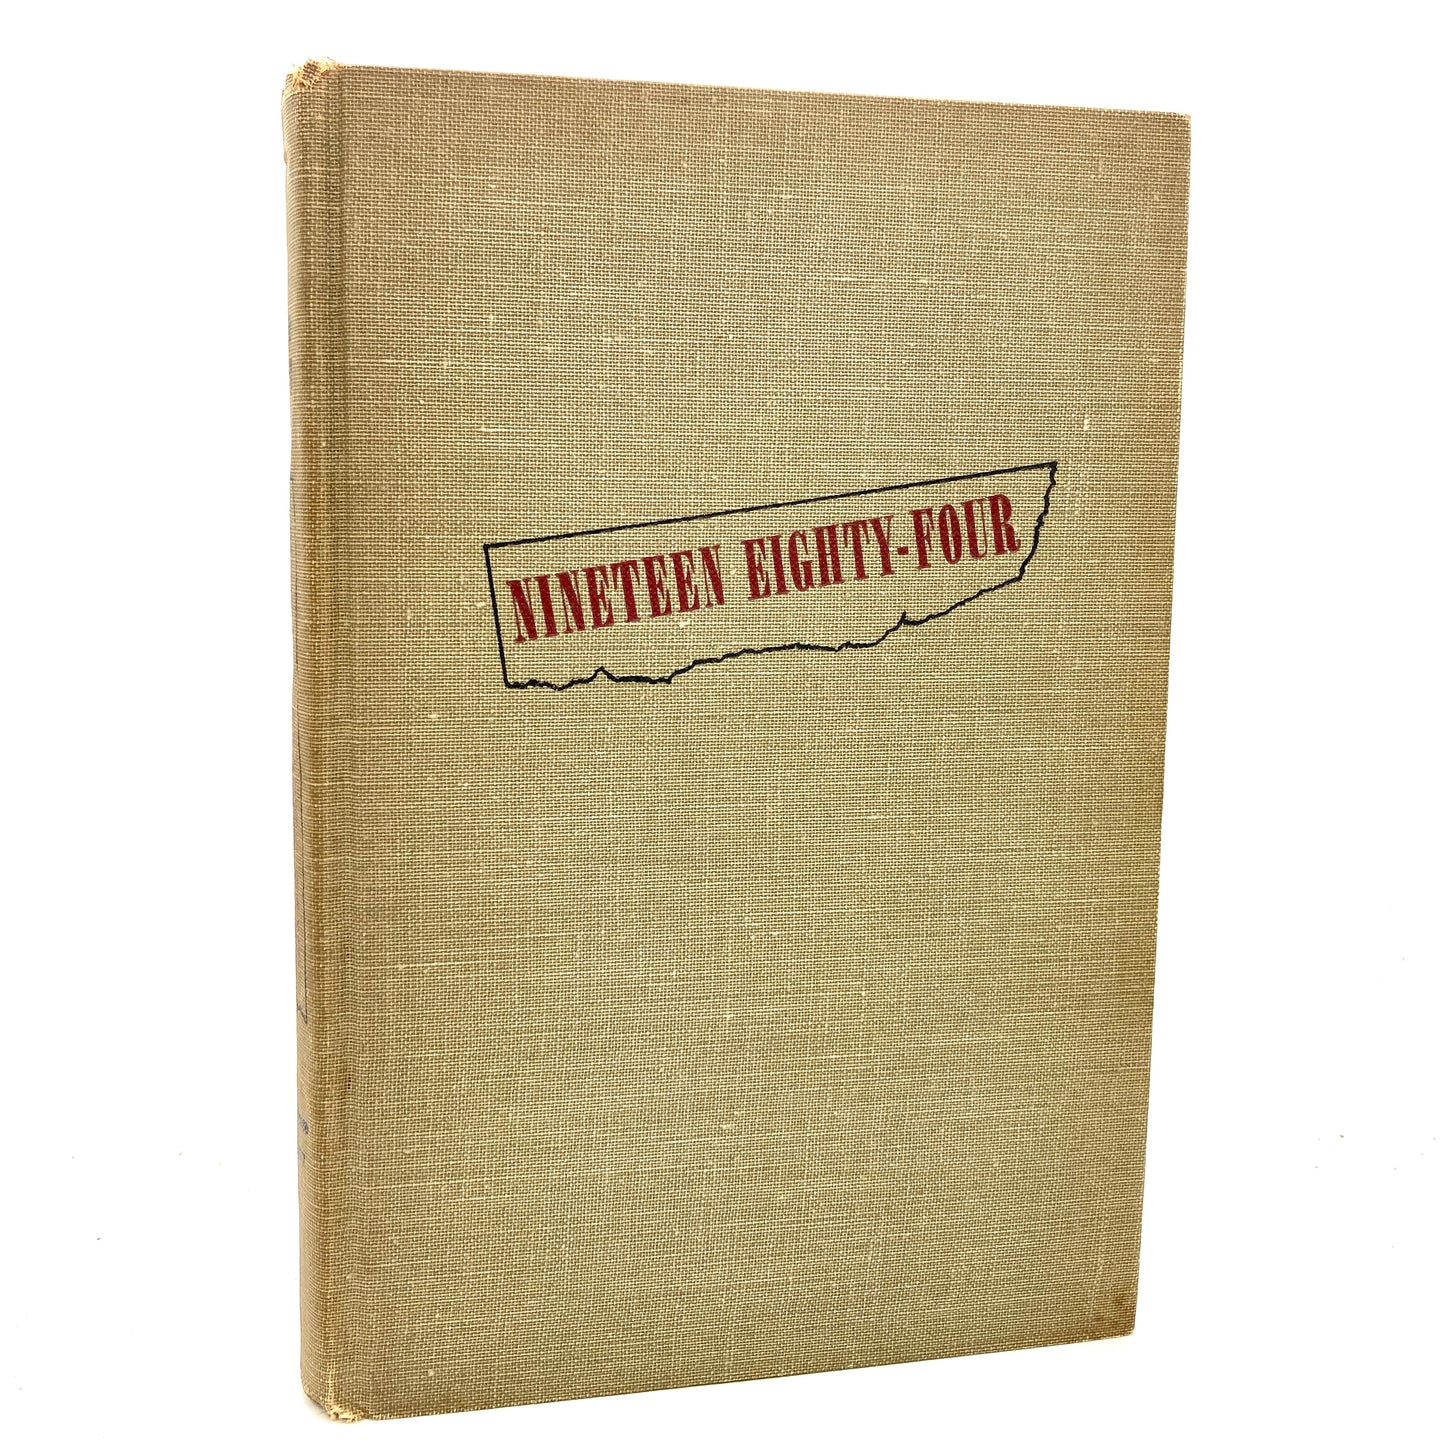 ORWELL, George "Nineteen Eighty-Four" [Harcourt, Brace & Co, 1949]